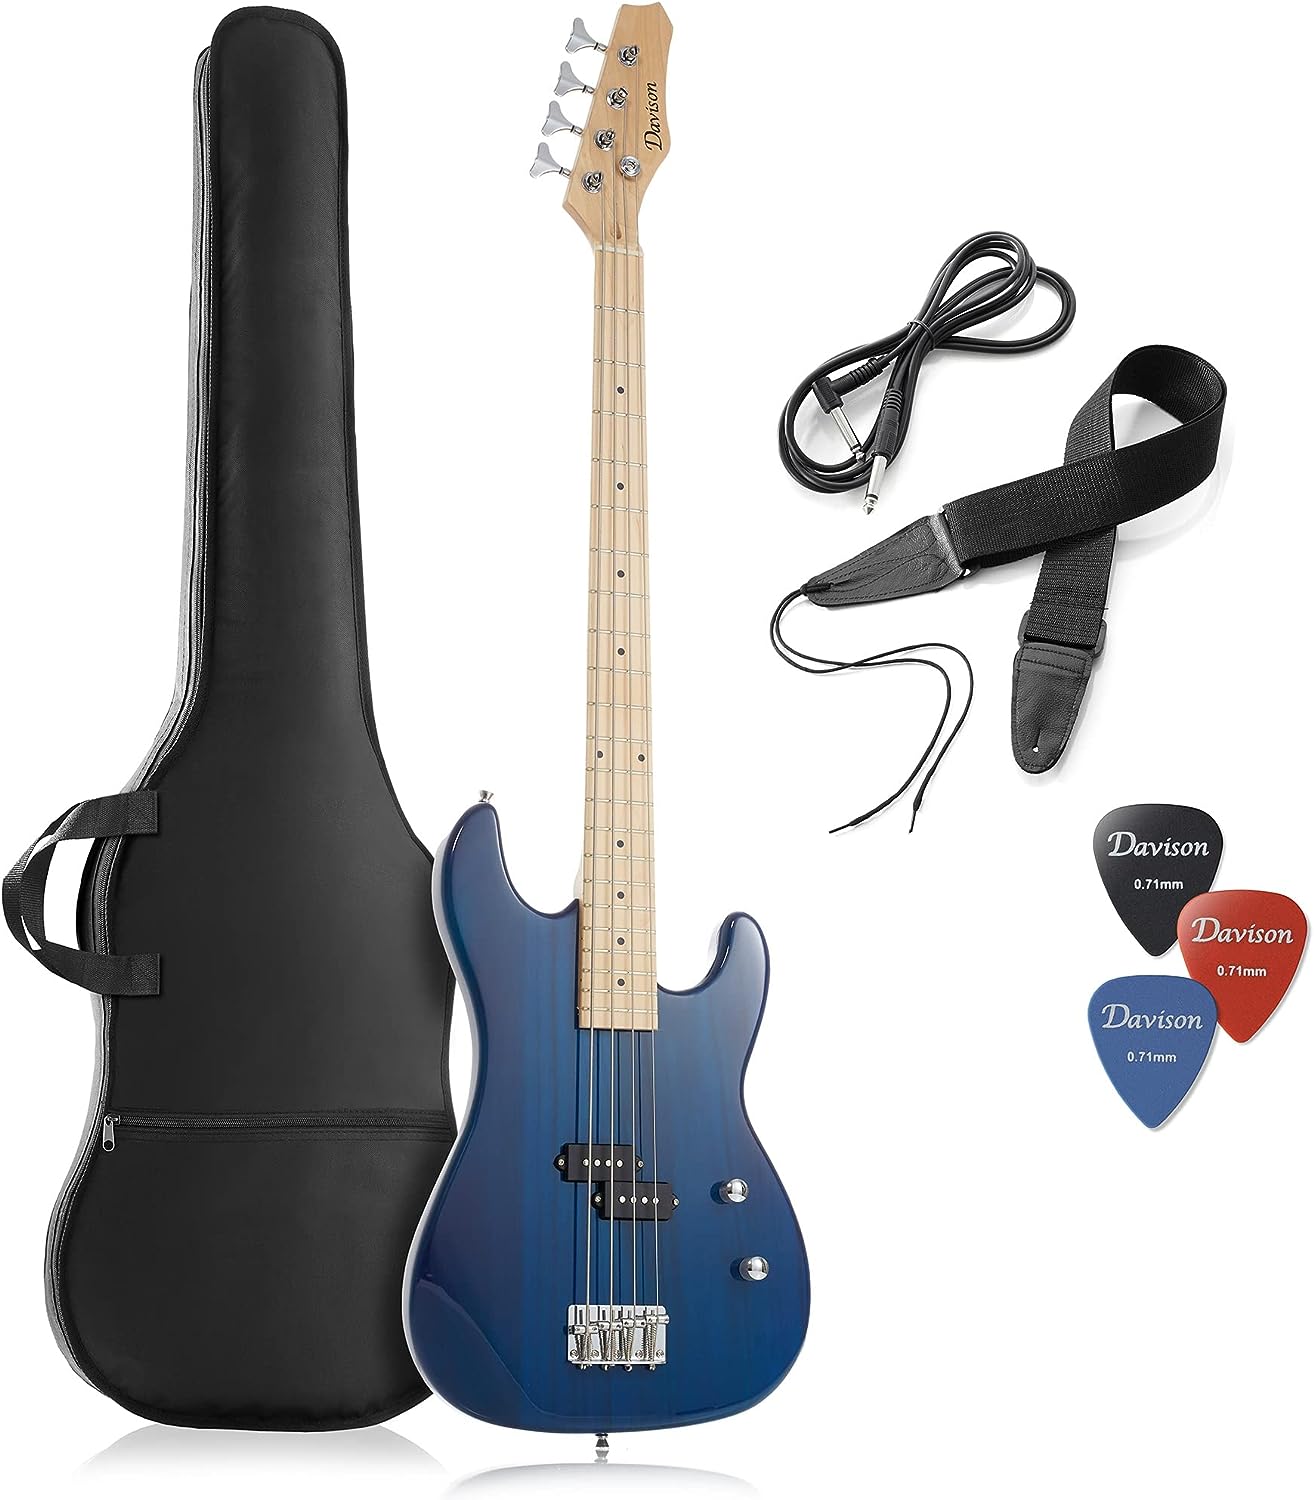 Davison Guitars Guitars 4-String Electric Bass Guitar Beginner Kit on a white background